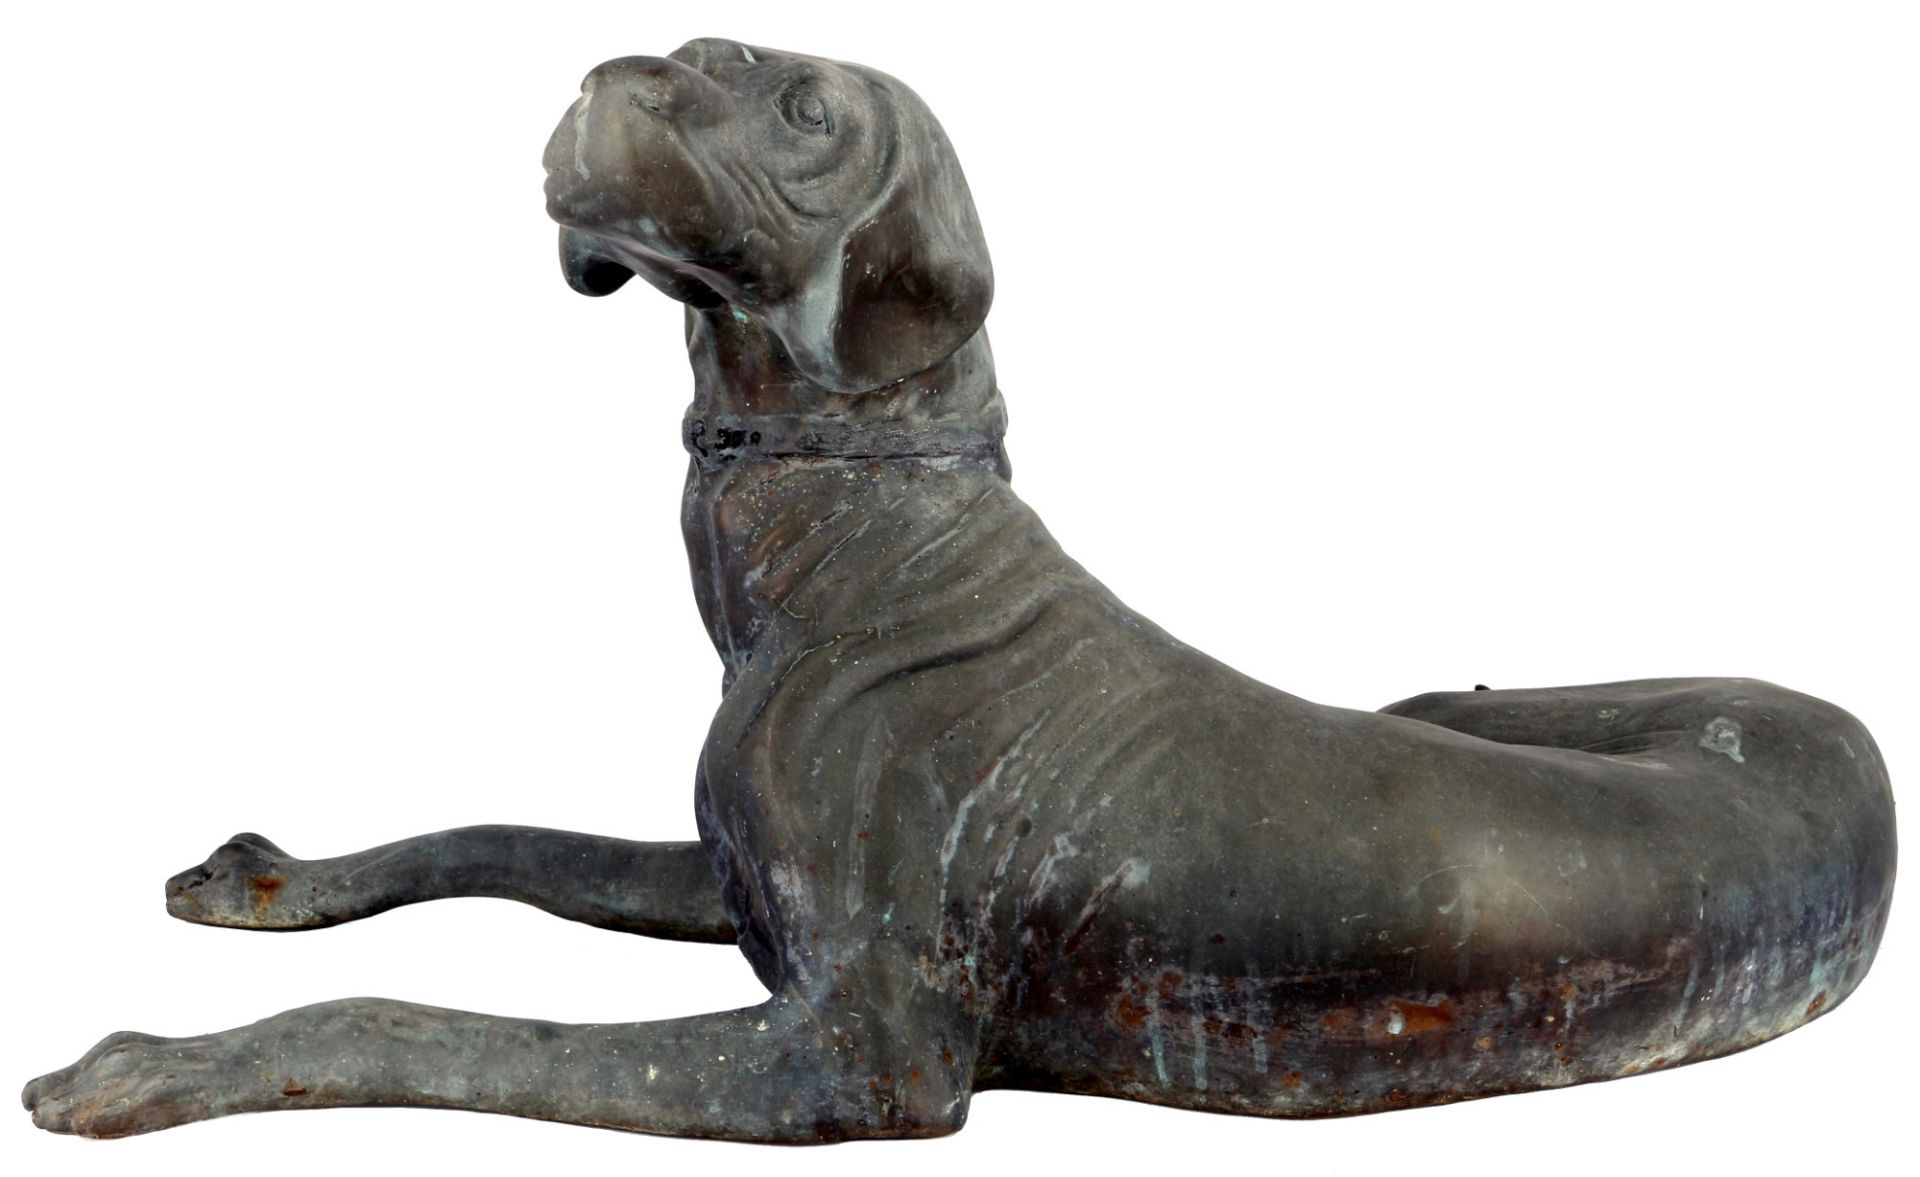 Bronze lebensgroßer liegender Hund Weimaraner Skulptur, large lying dog Weimaraner sculpture,